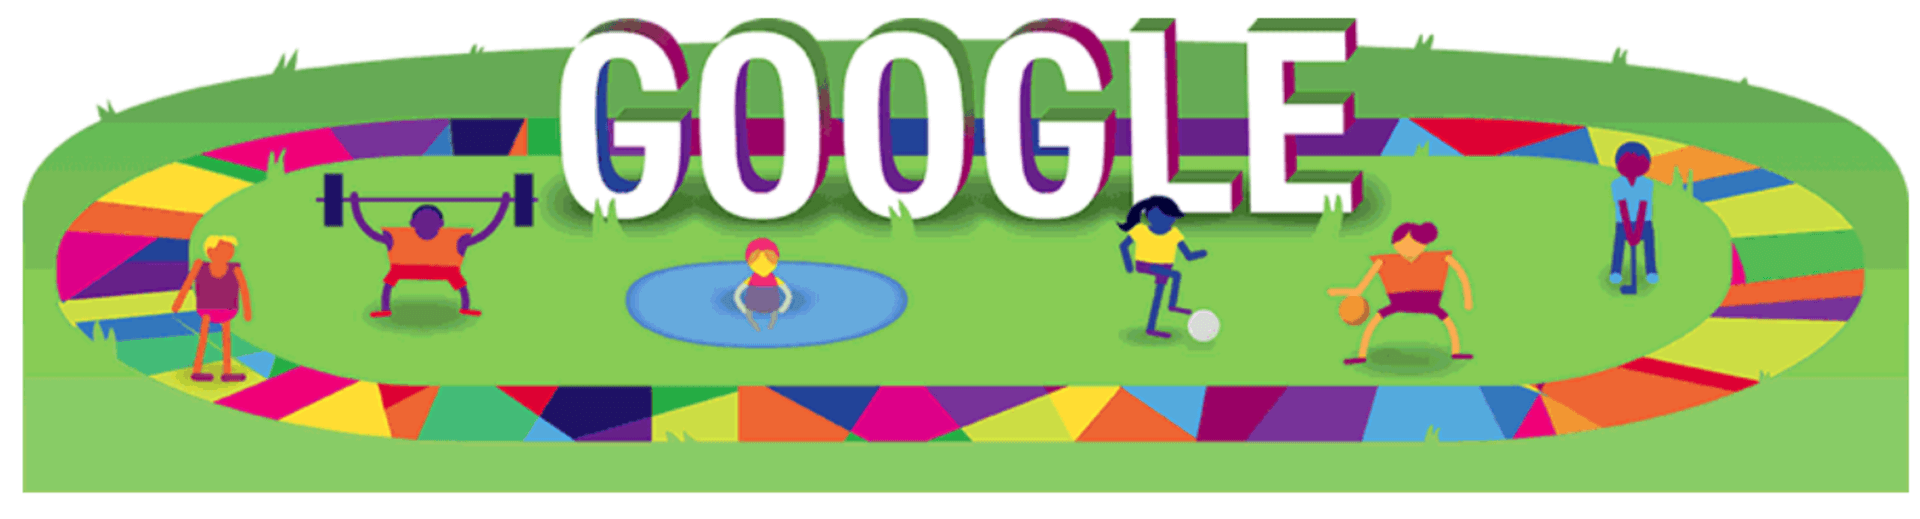 Olympic Google Logo - Special Olympics World Games Google Logo Celebrates 47th Year Of ...